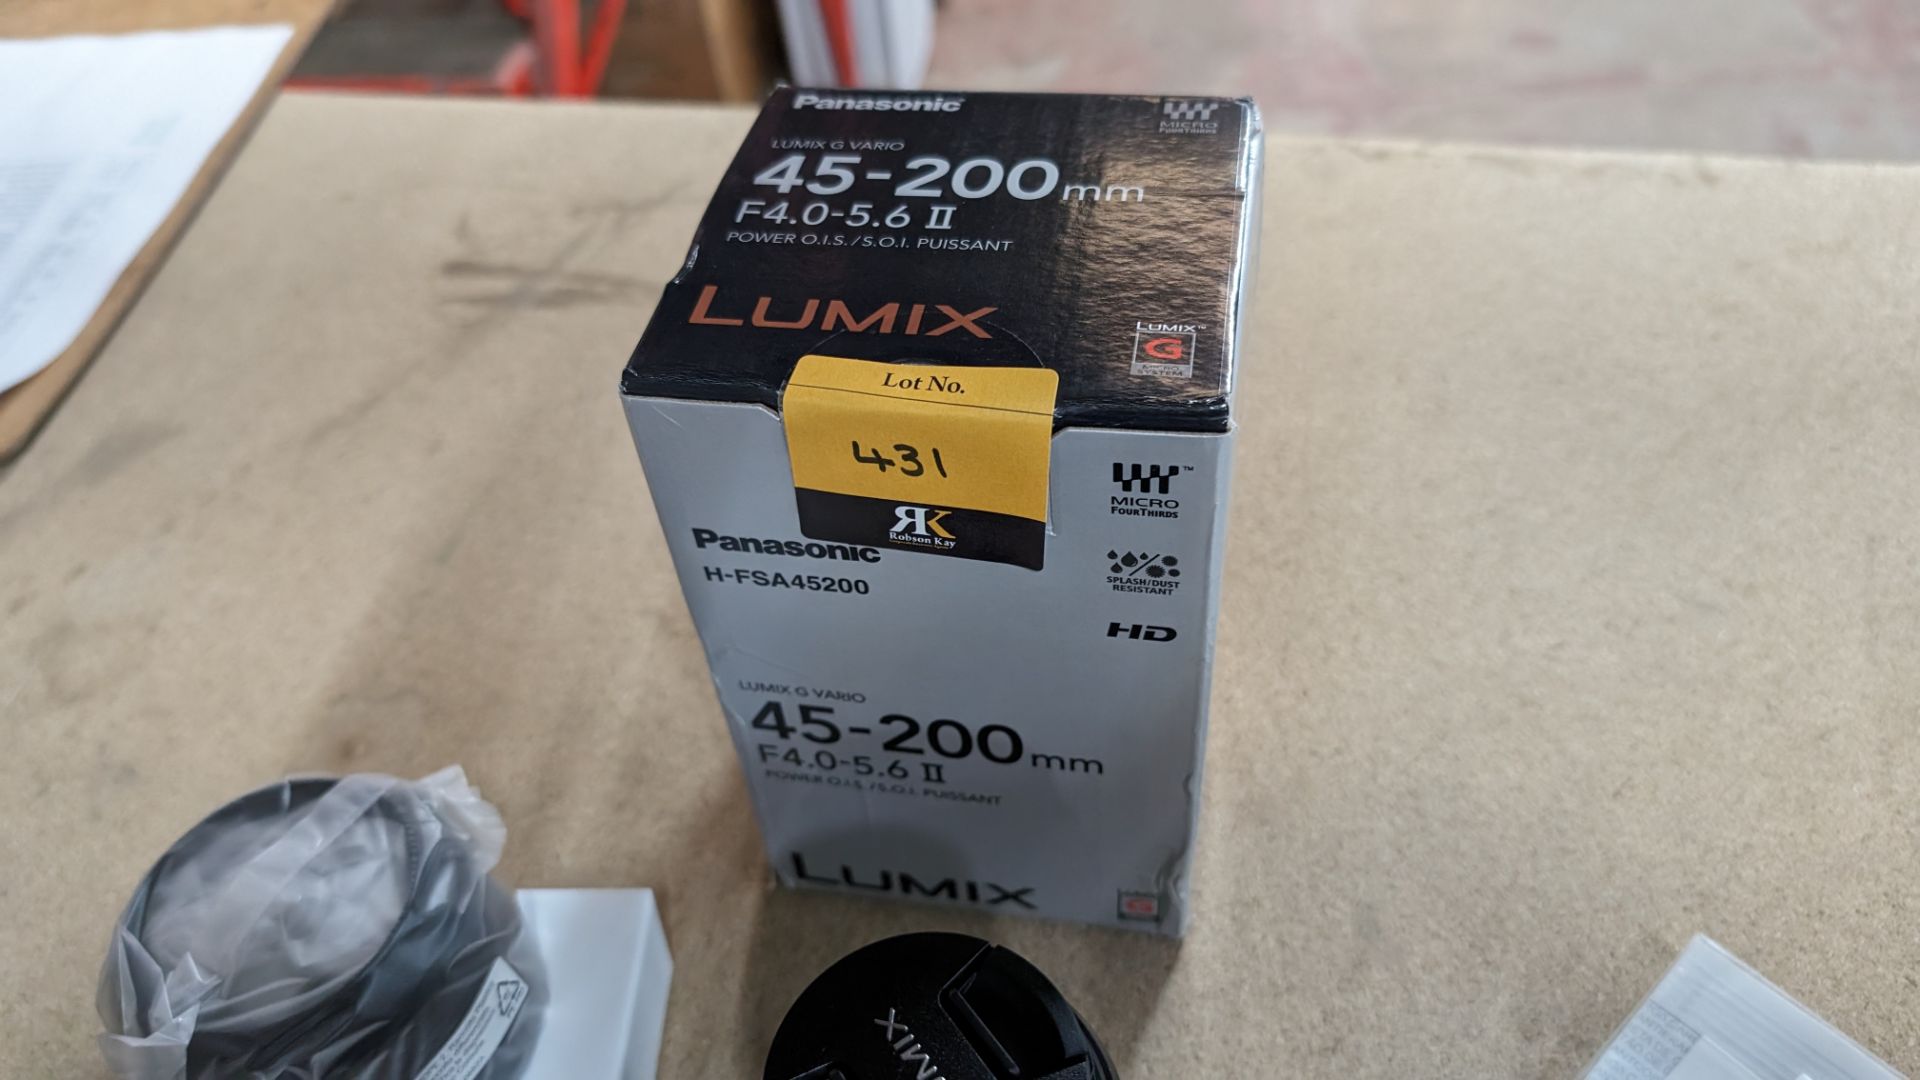 Panasonic Lumix G Vario 45-200mm lens, model H-FSA45200, f4.0-5.6 II - Bild 8 aus 10